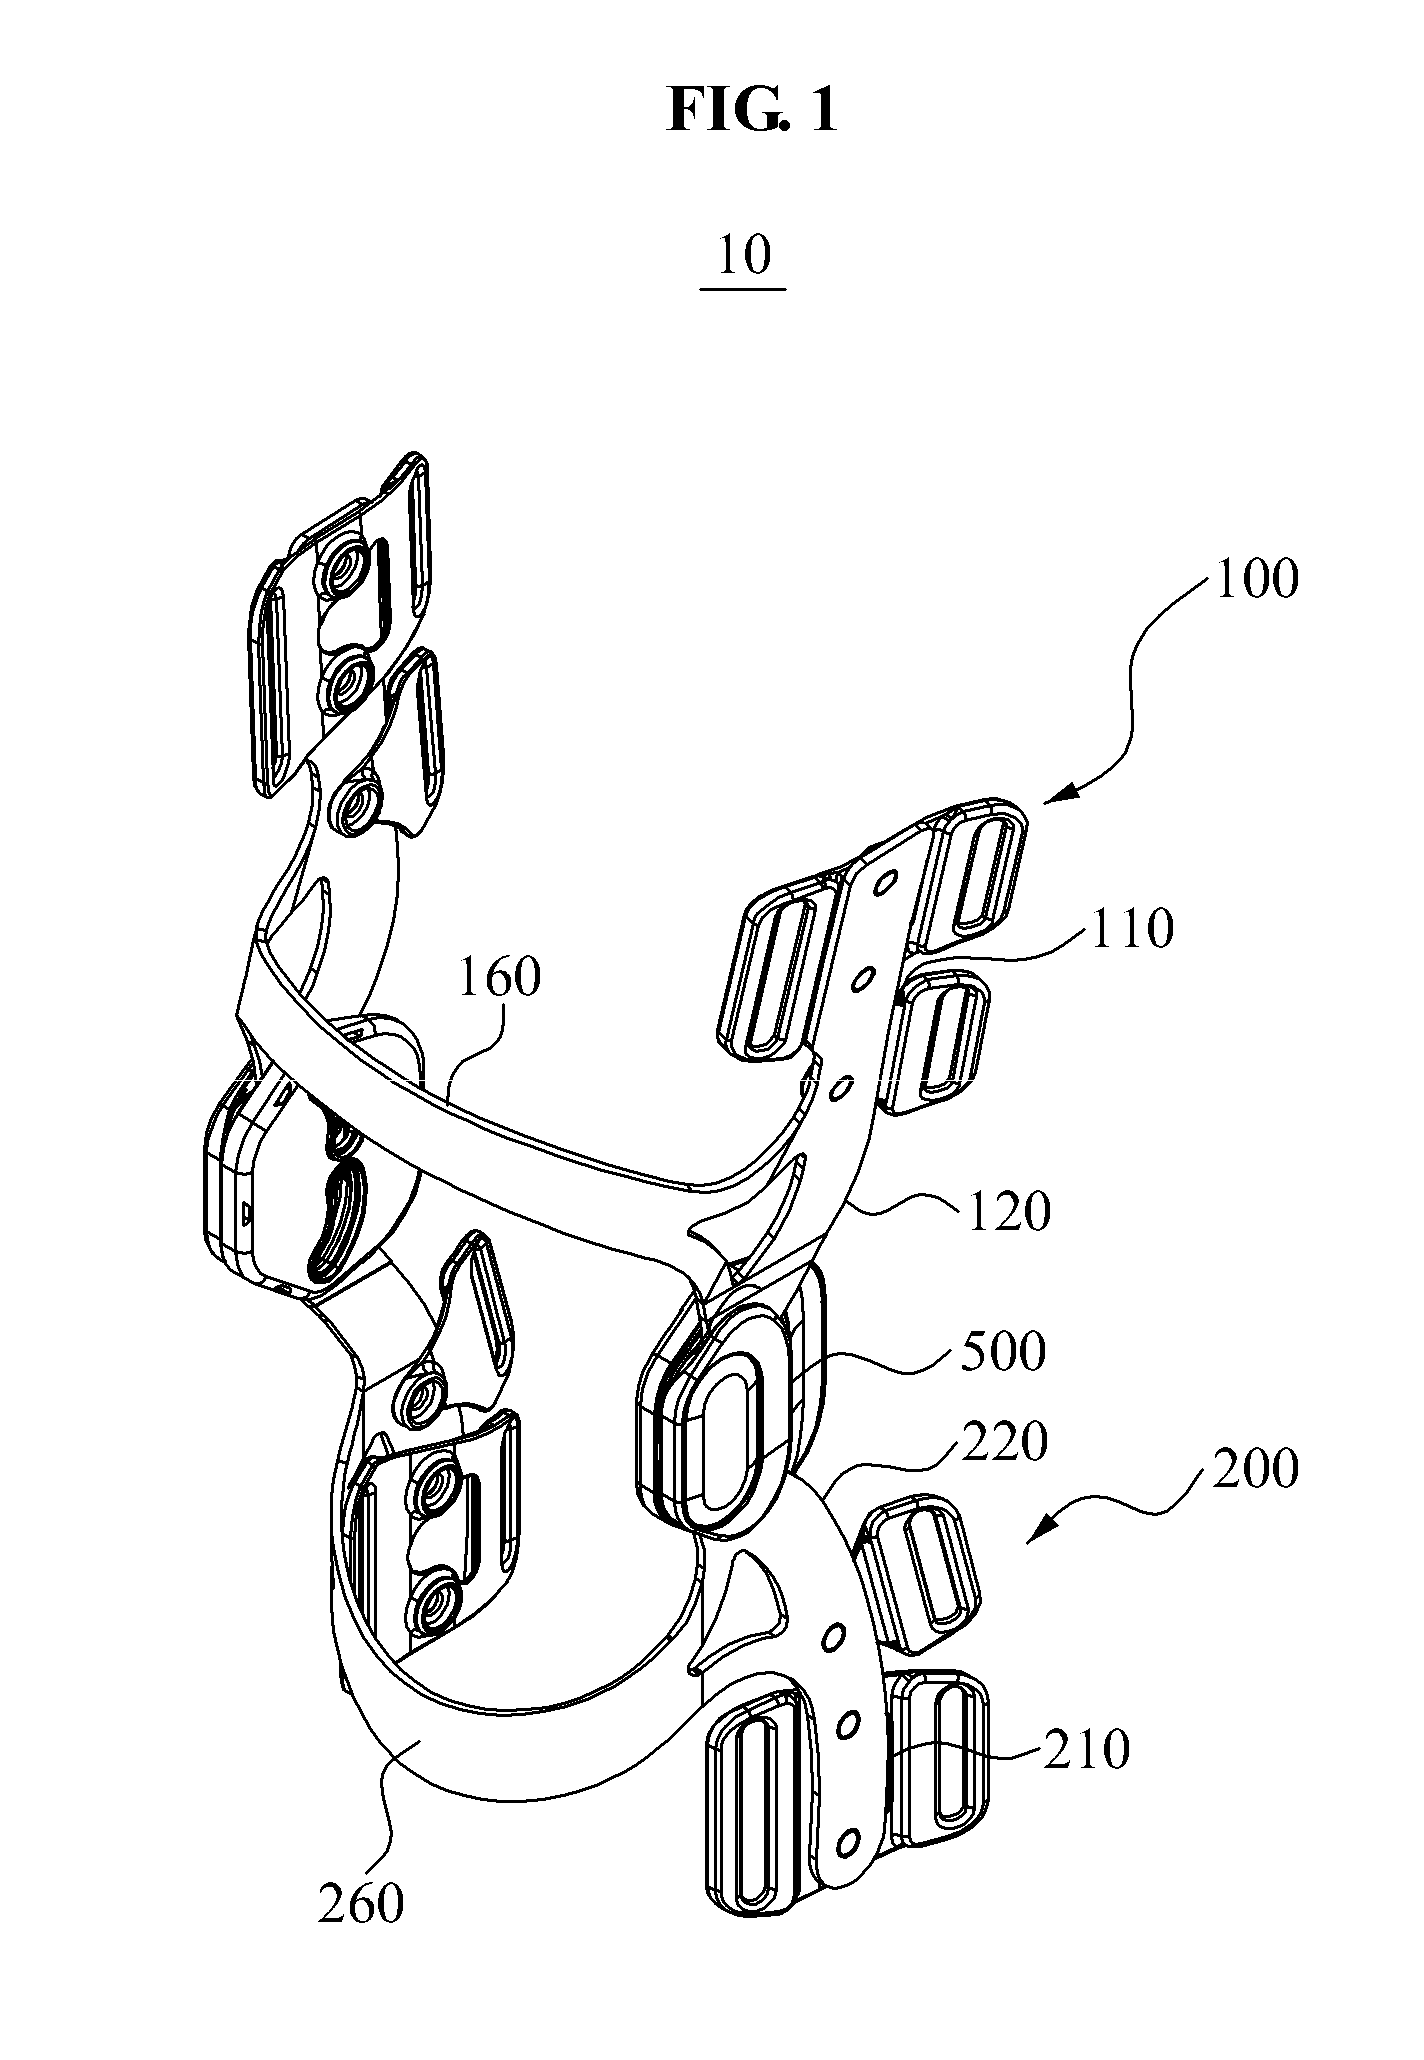 Knee traction apparatus